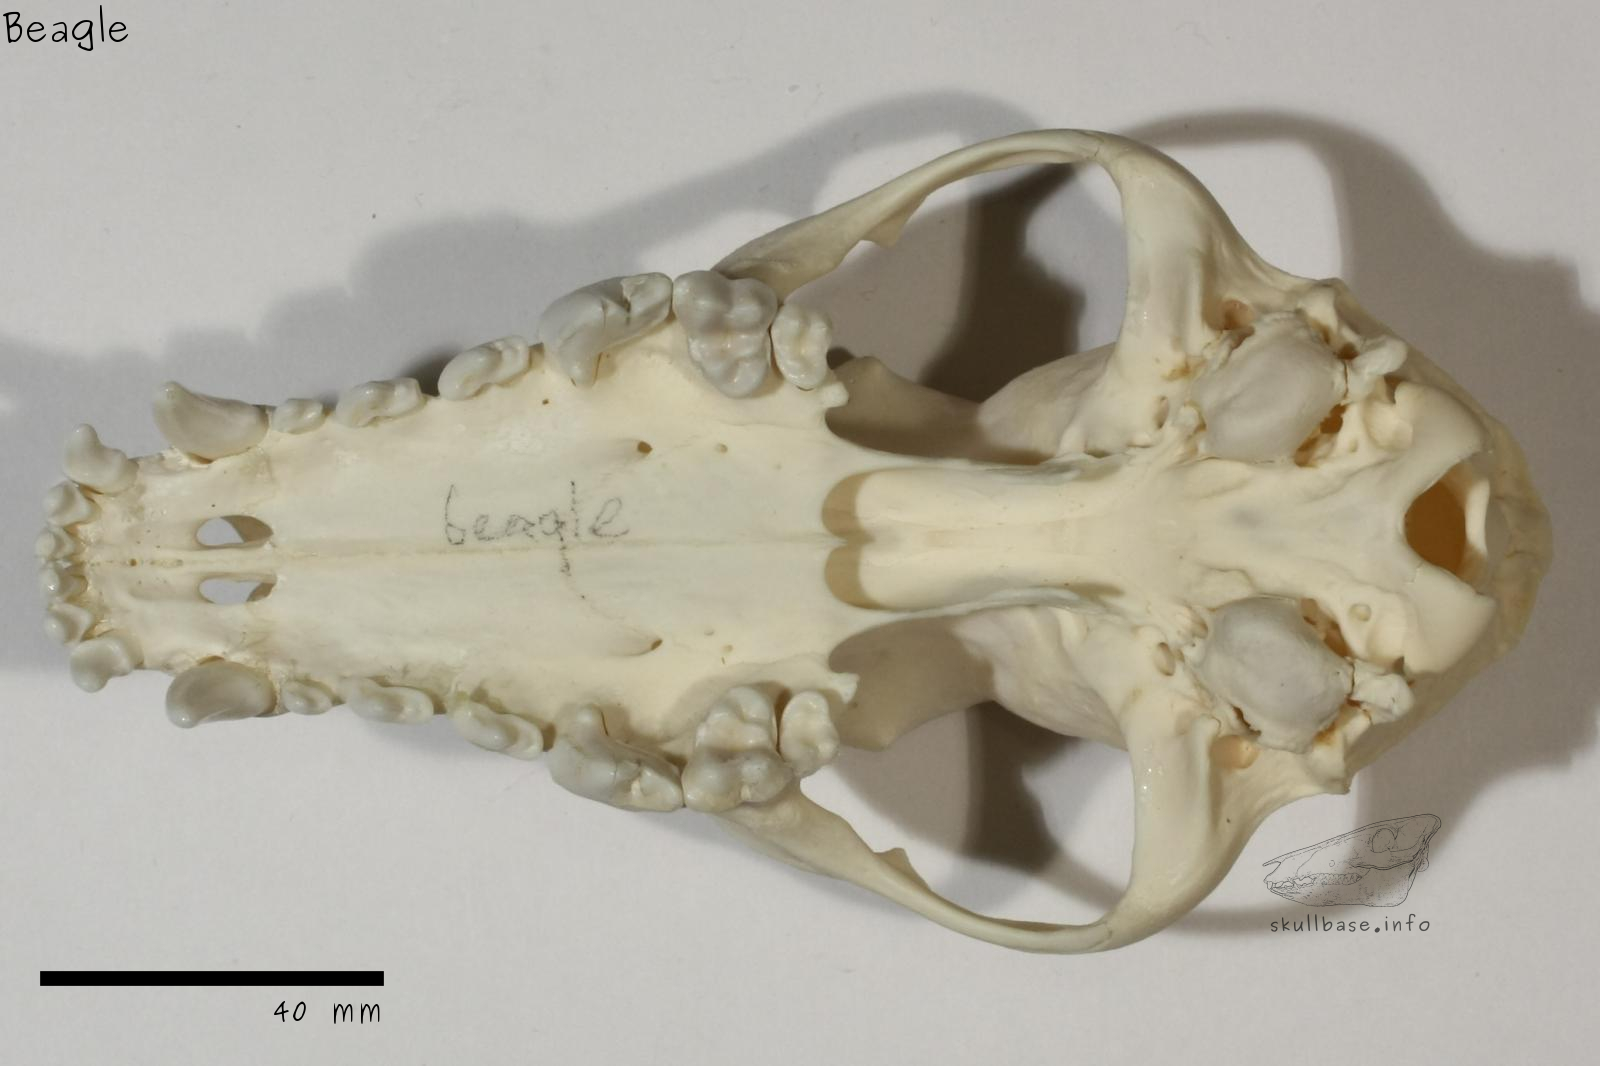 Beagle (Canis lupus familiaris) skull ventral view